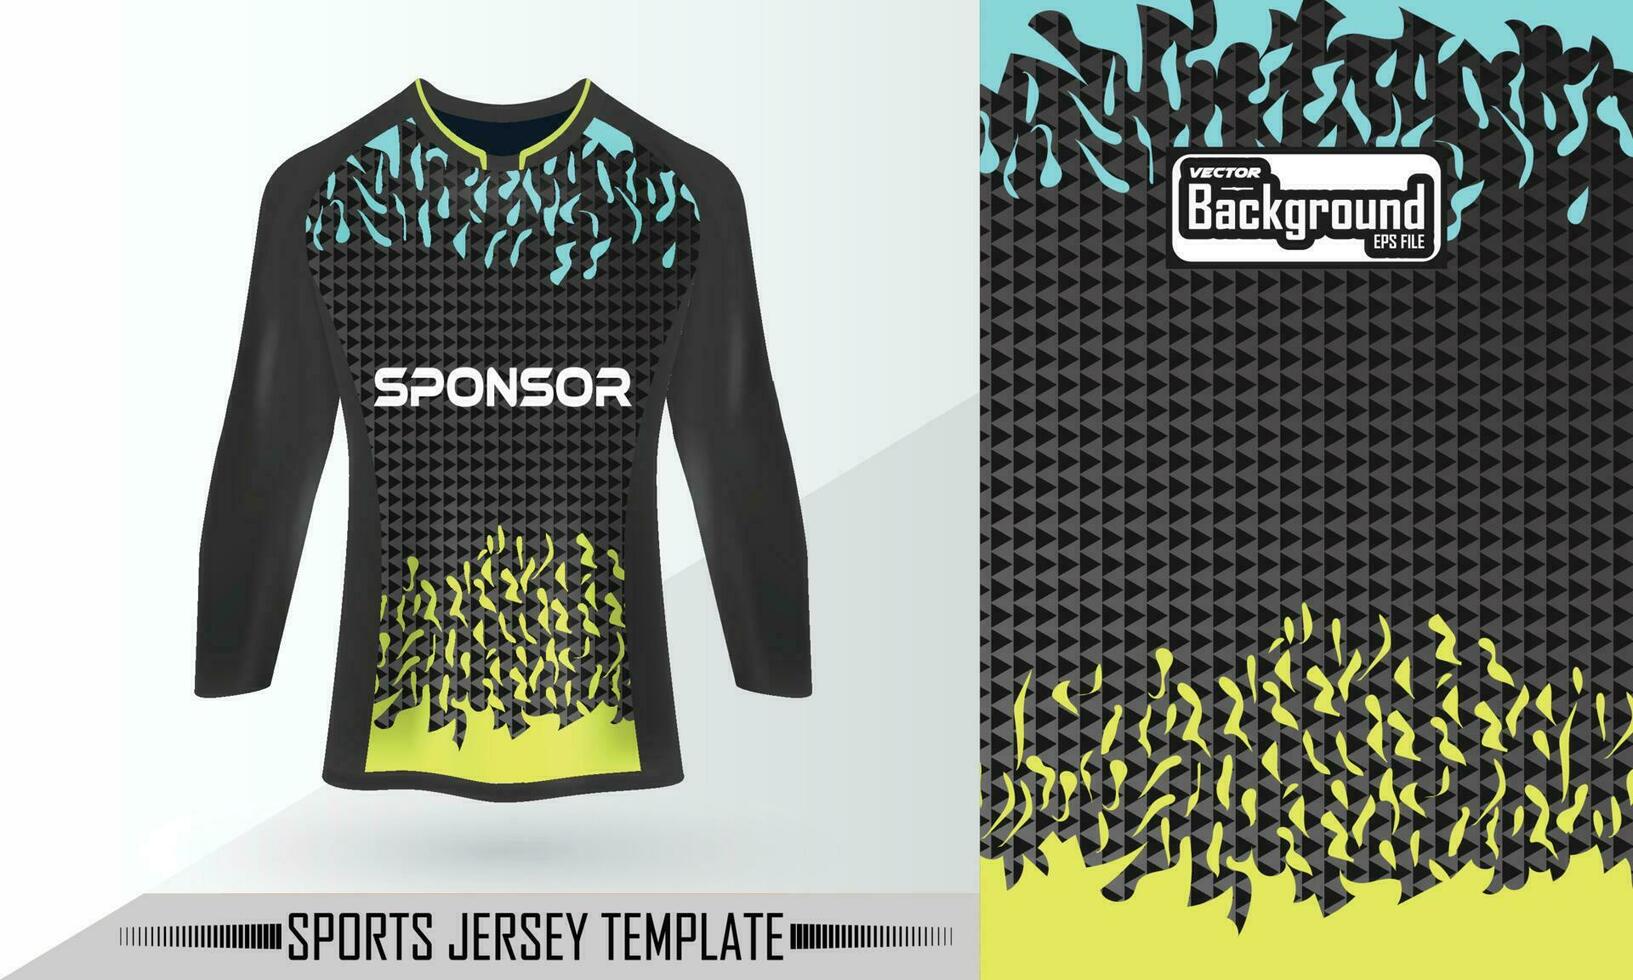 Creative Soccer Jersey Design Template vector